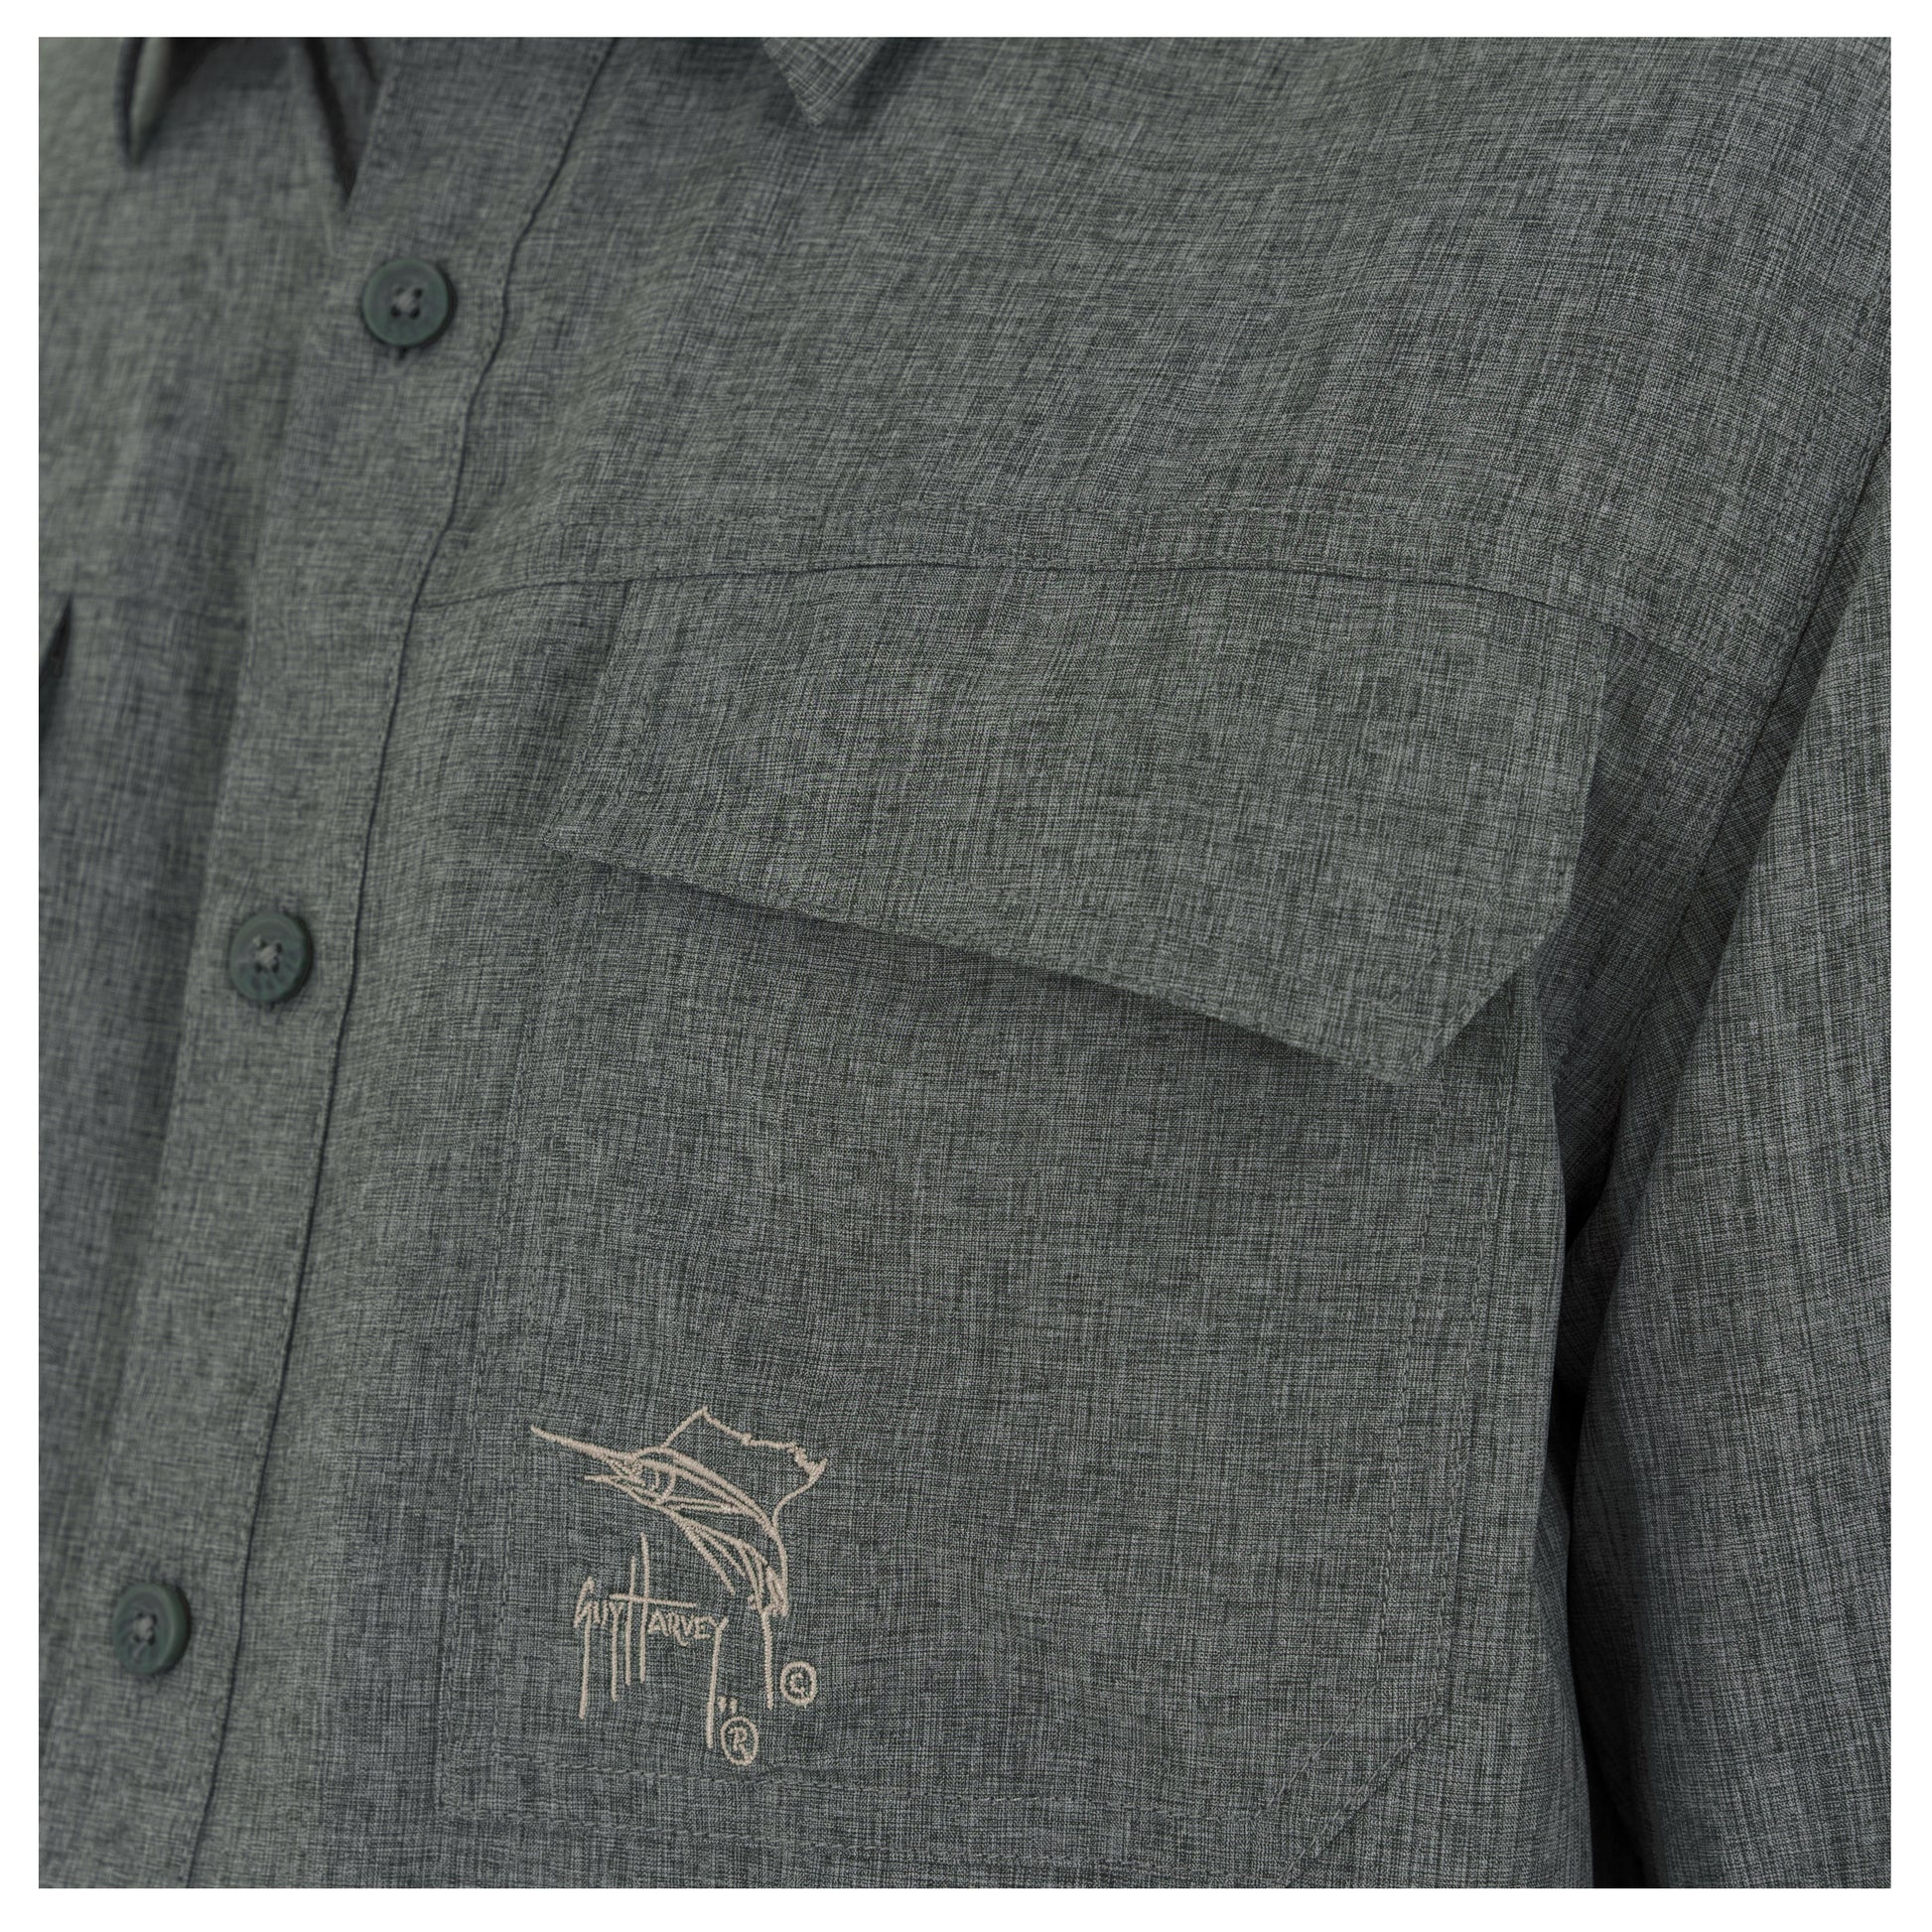 Men's Short Sleeve Heather Textured Cationic Grey Fishing Shirt View 5